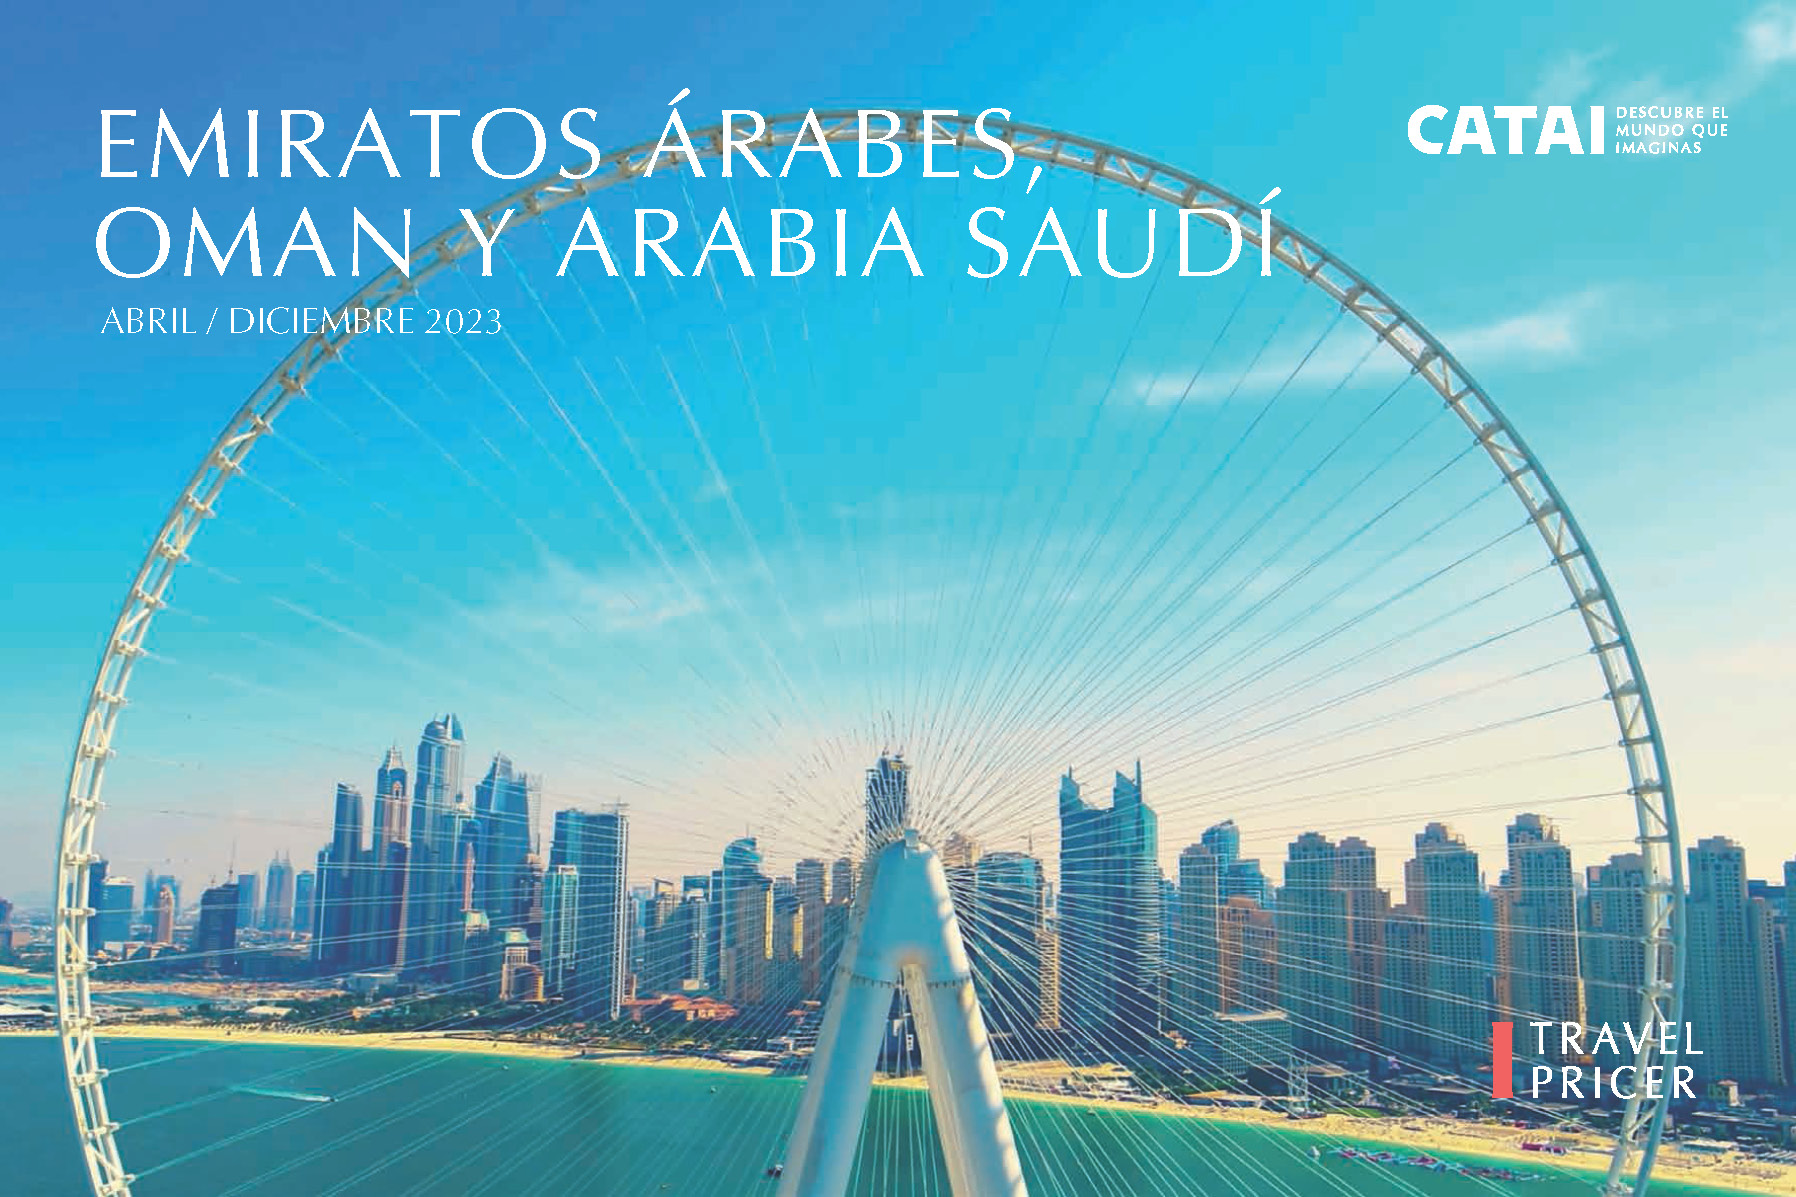 Catalogo Catai Emiratos Arabes Oman y Arabia Saudi 2023